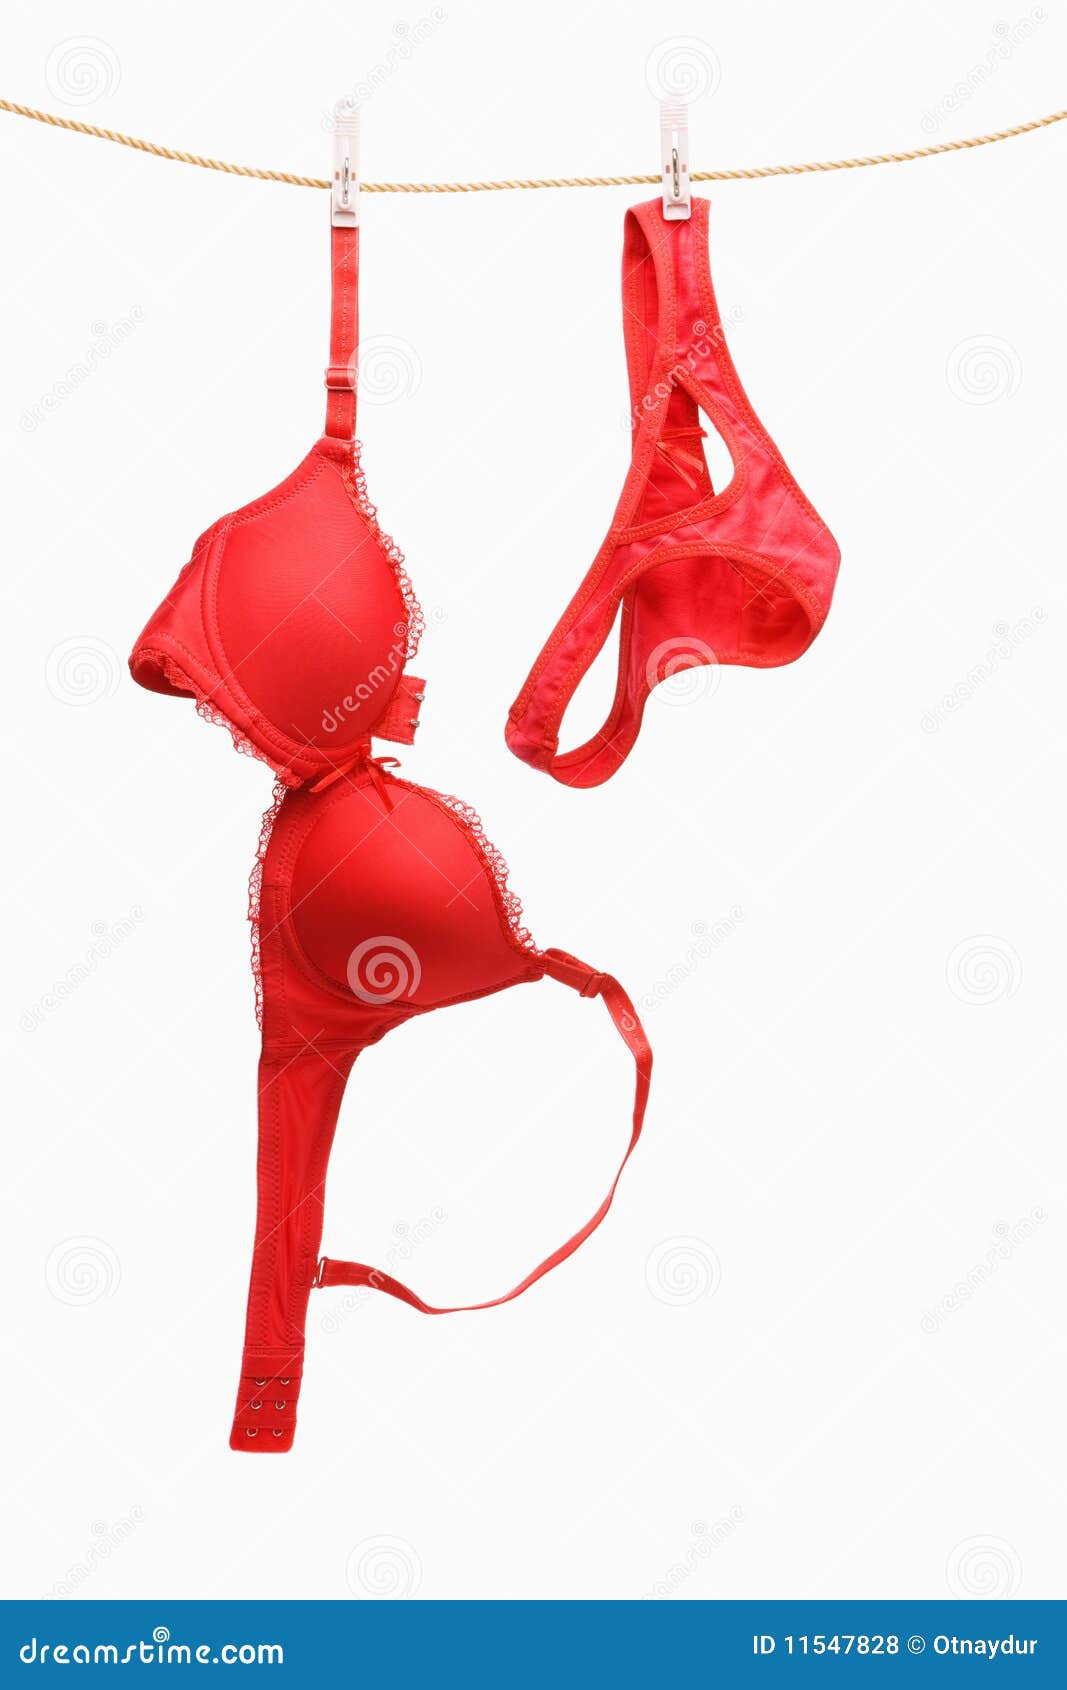 https://thumbs.dreamstime.com/z/woman-s-red-underwear-hanging-rope-11547828.jpg